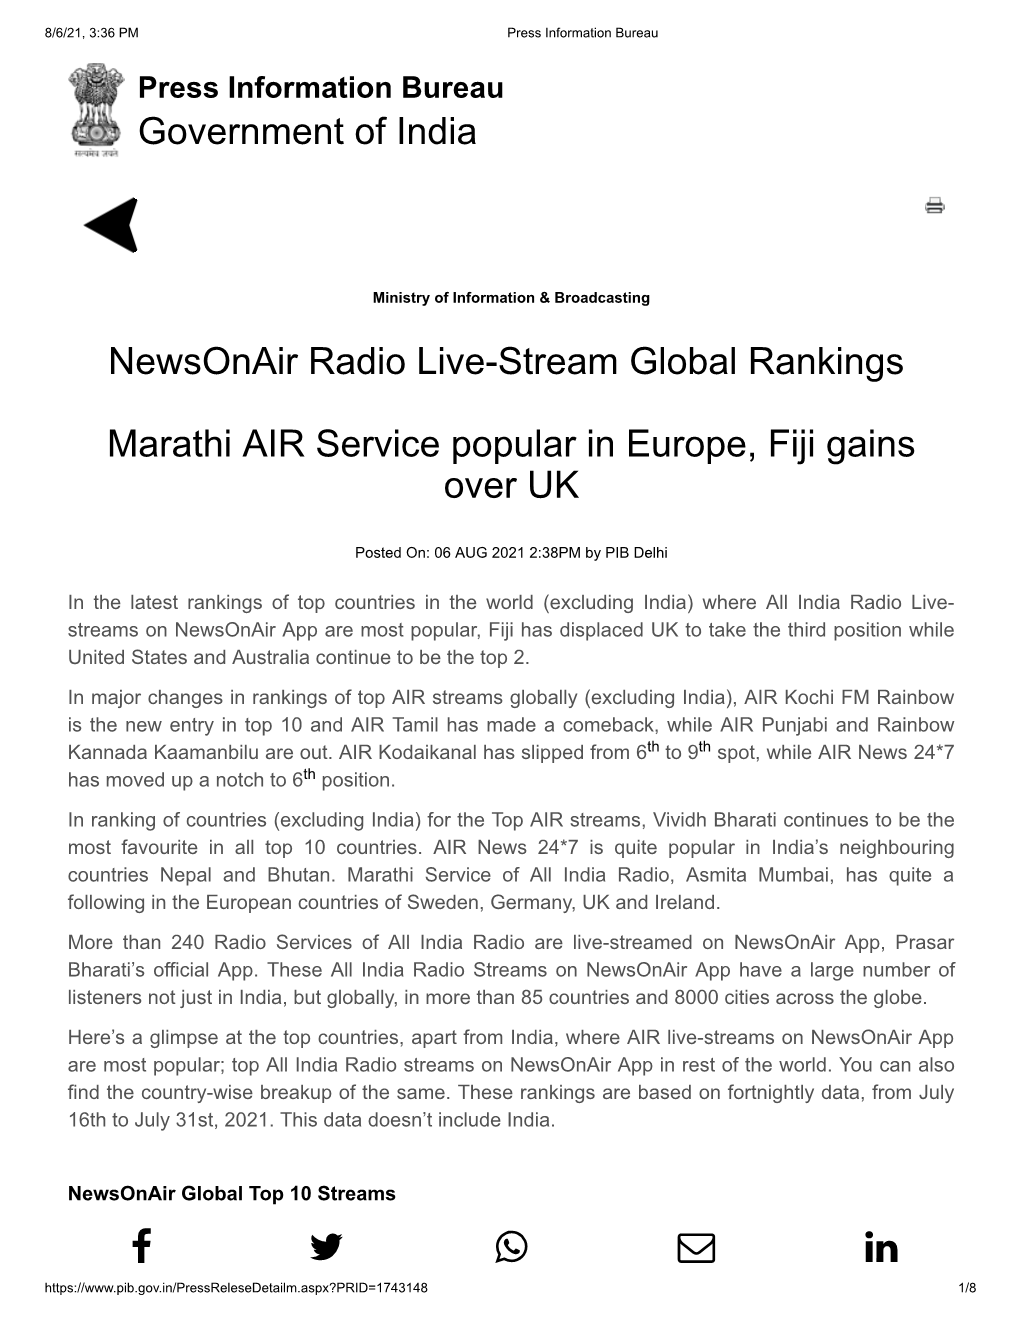 Newsonair Radio Live-Stream Global Rankings Marathi AIR Service